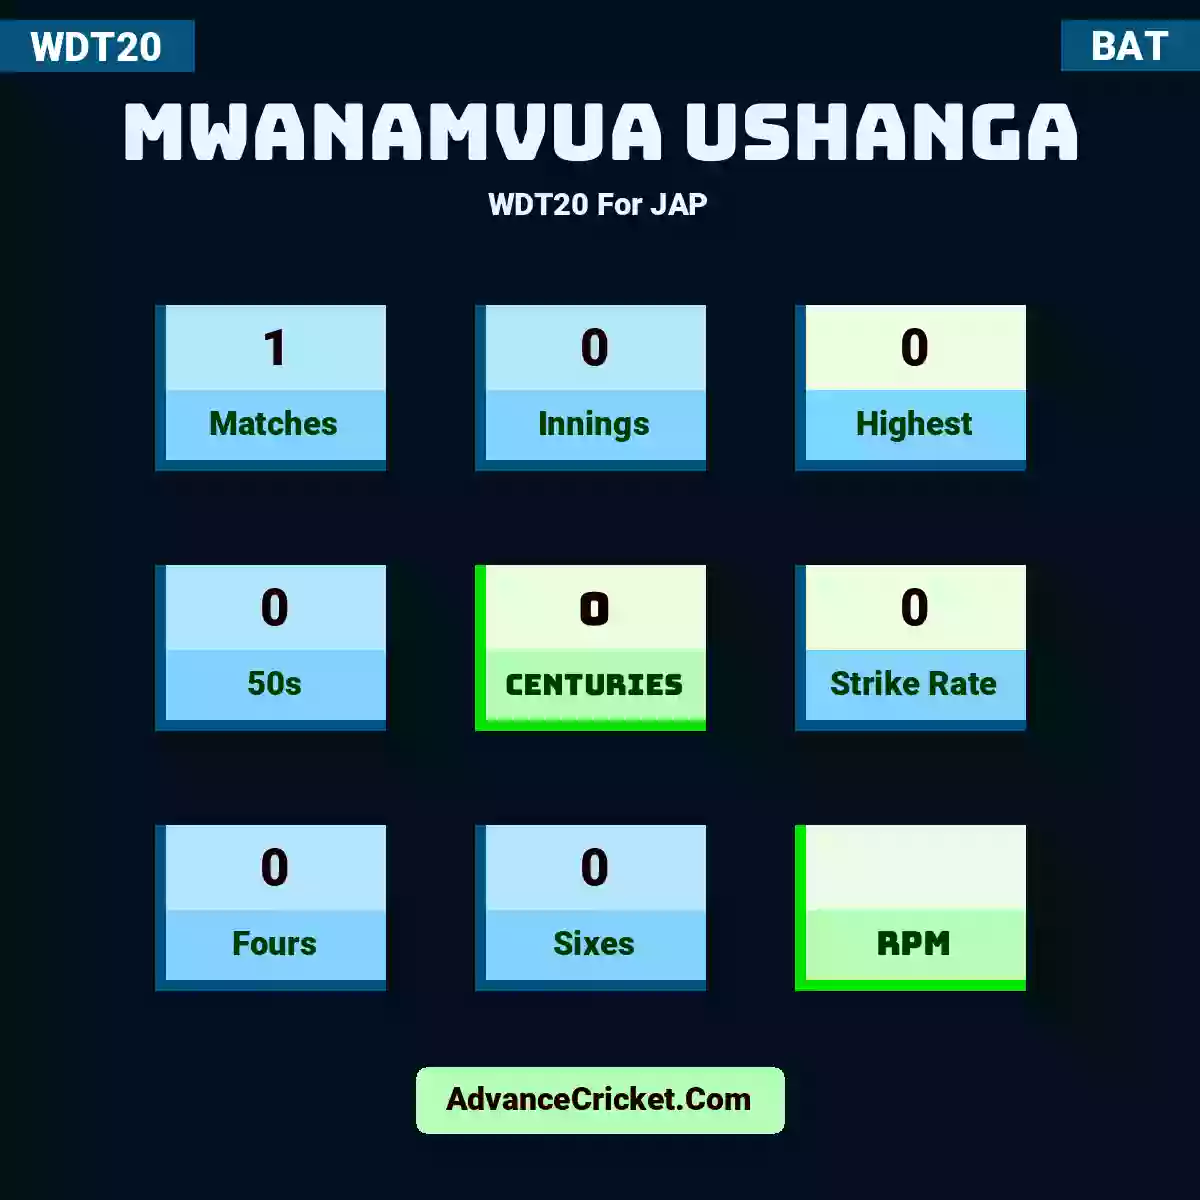 Mwanamvua Ushanga WDT20  For JAP, Mwanamvua Ushanga played 1 matches, scored 0 runs as highest, 0 half-centuries, and 0 centuries, with a strike rate of 0. M.Ushanga  hit 0 fours and 0 sixes.